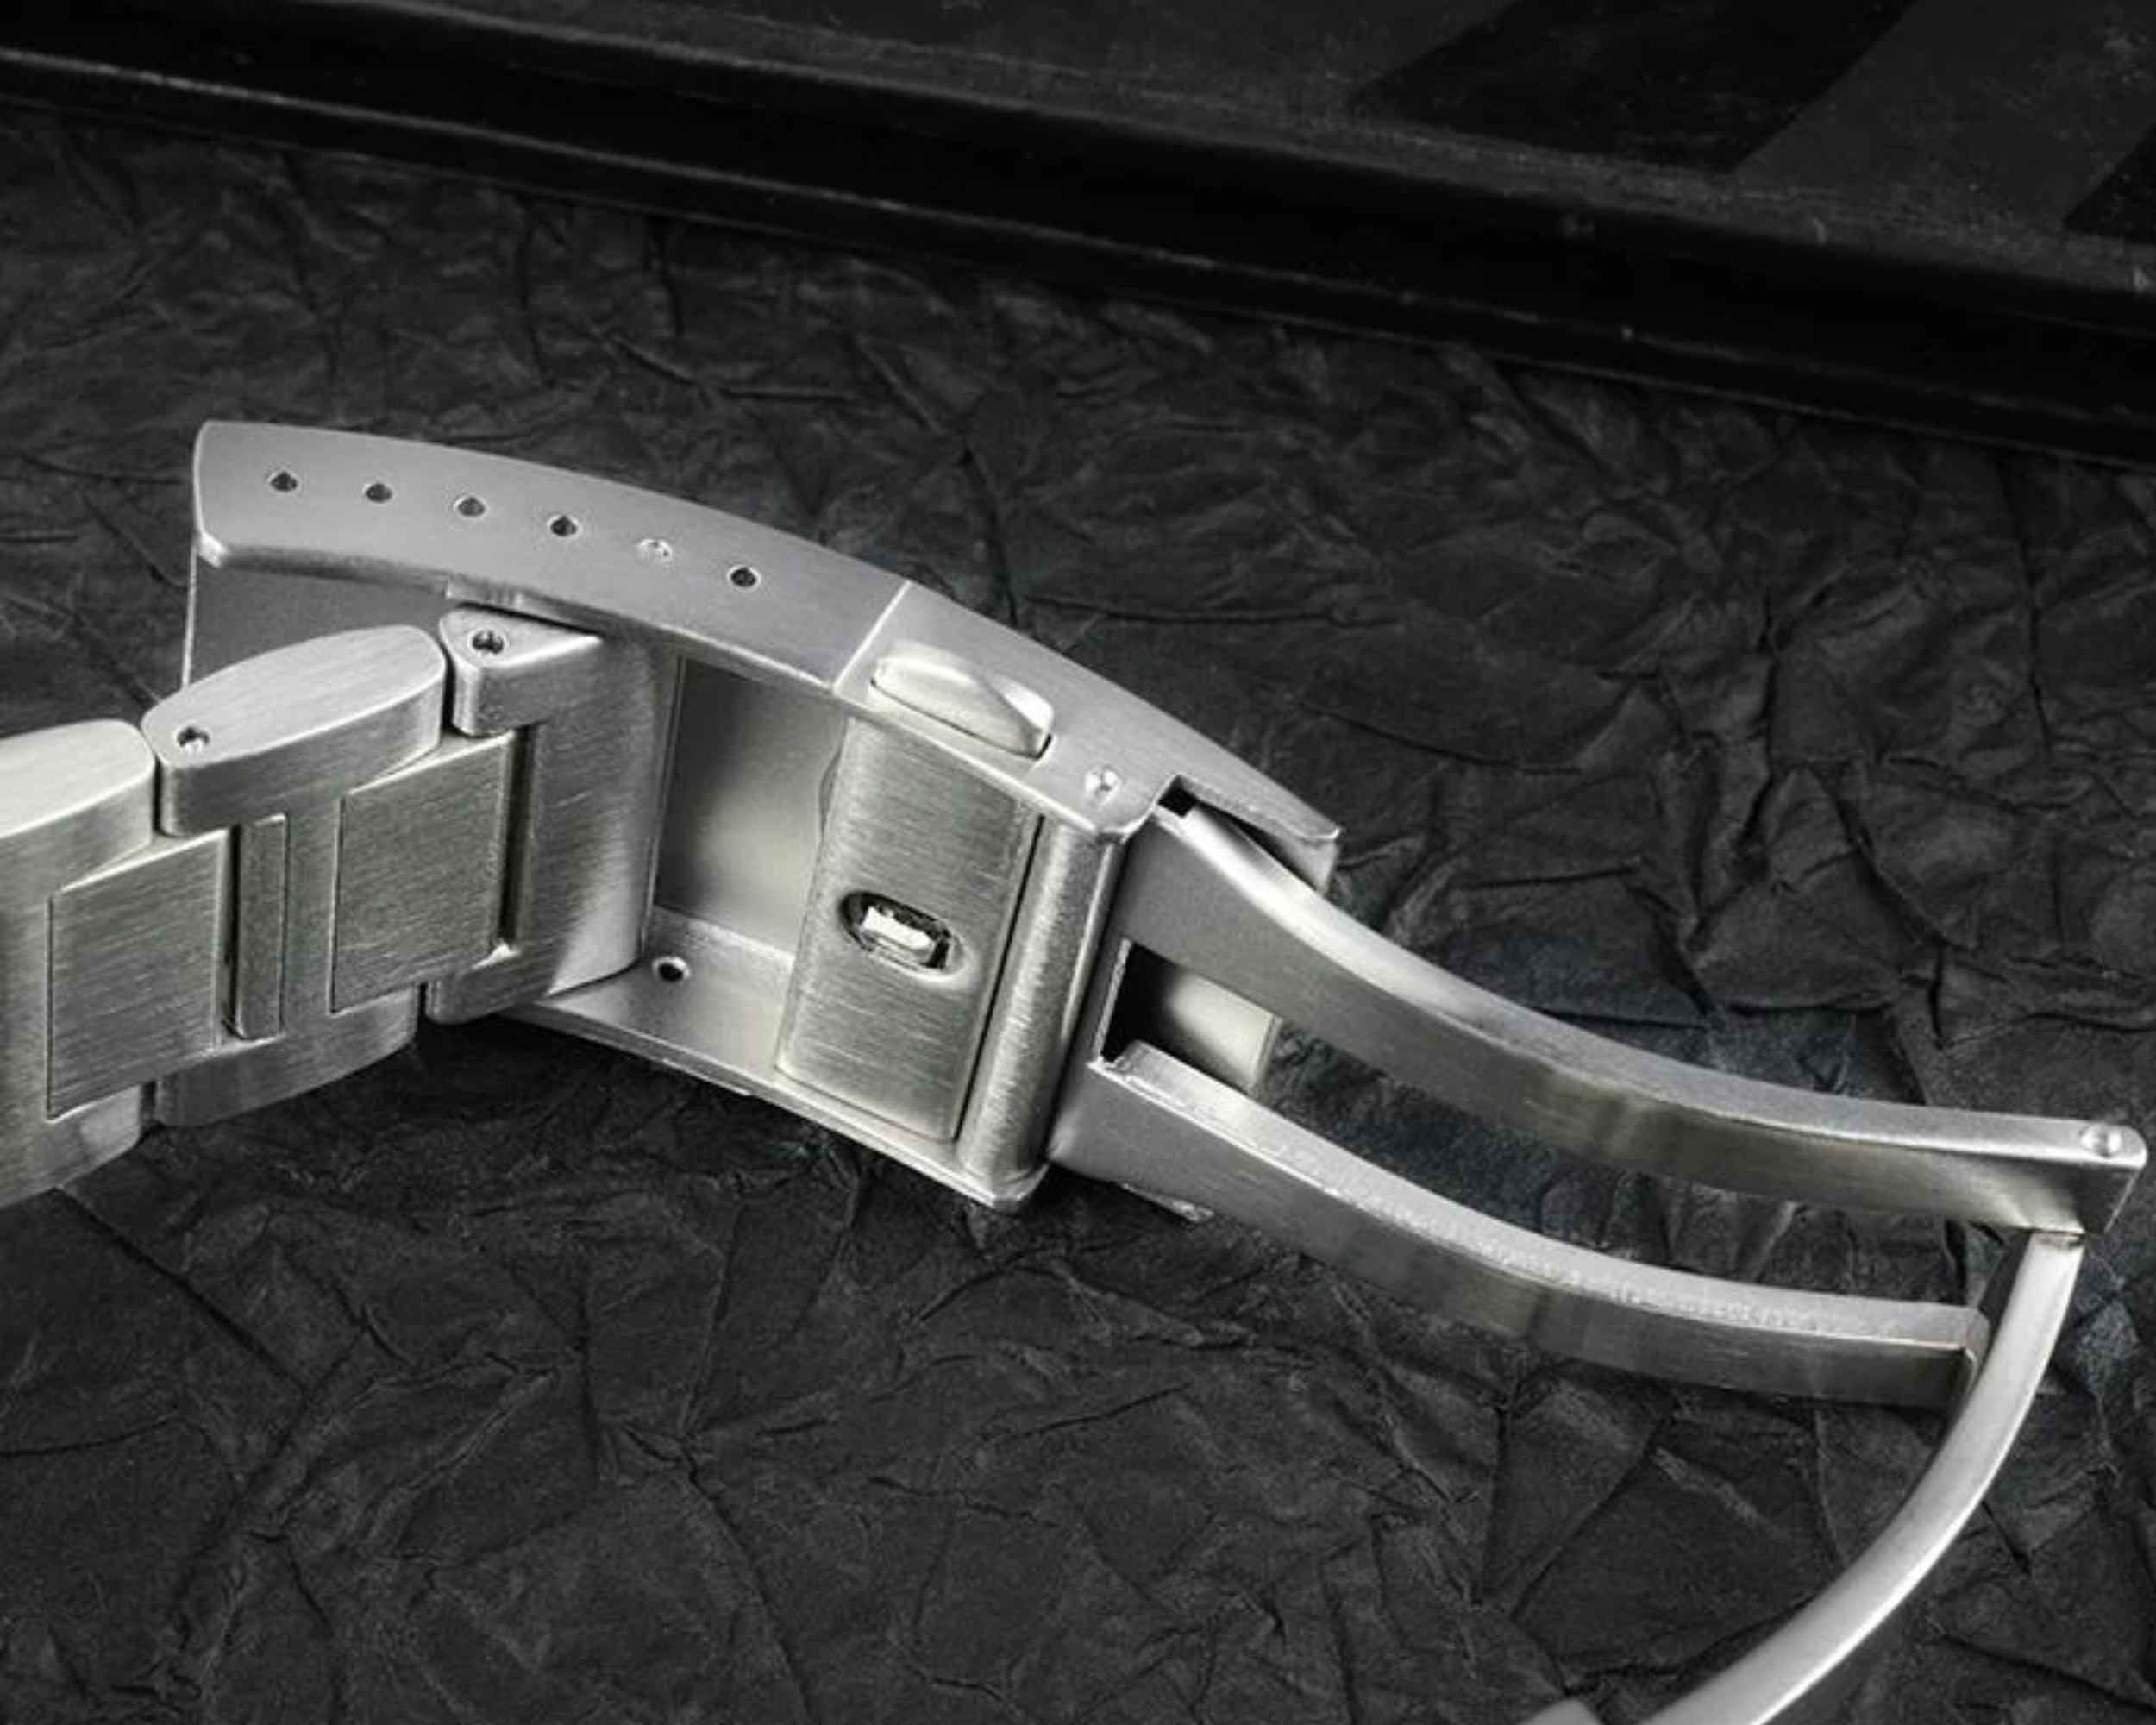 San Martin 62mas Automatic Watch SN007G-V4 - Grey san martin watches india online